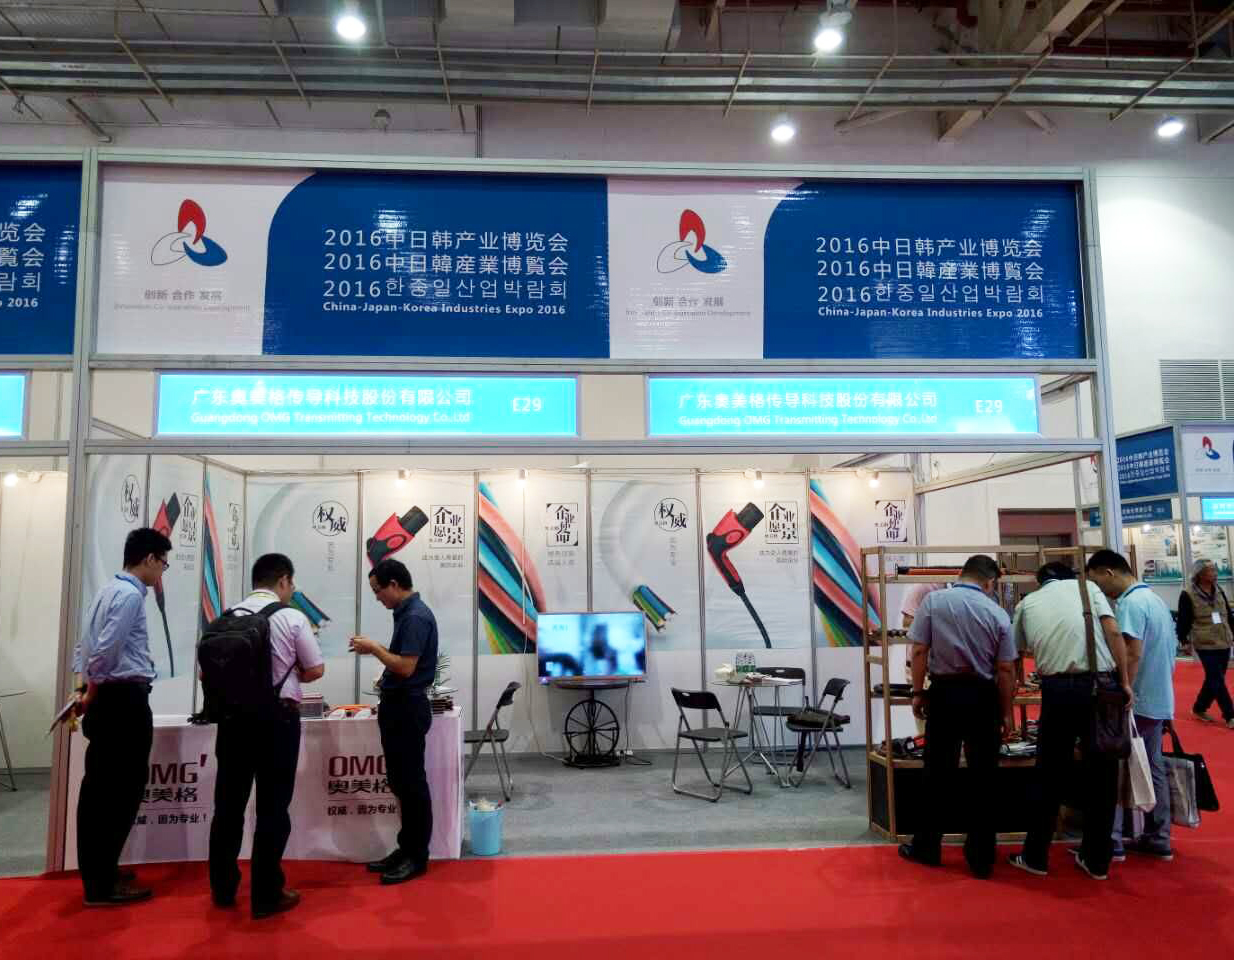 OMG nahm an der China-Japan-Korea Industry Expo 2016 in Weifang, Shandong, teil